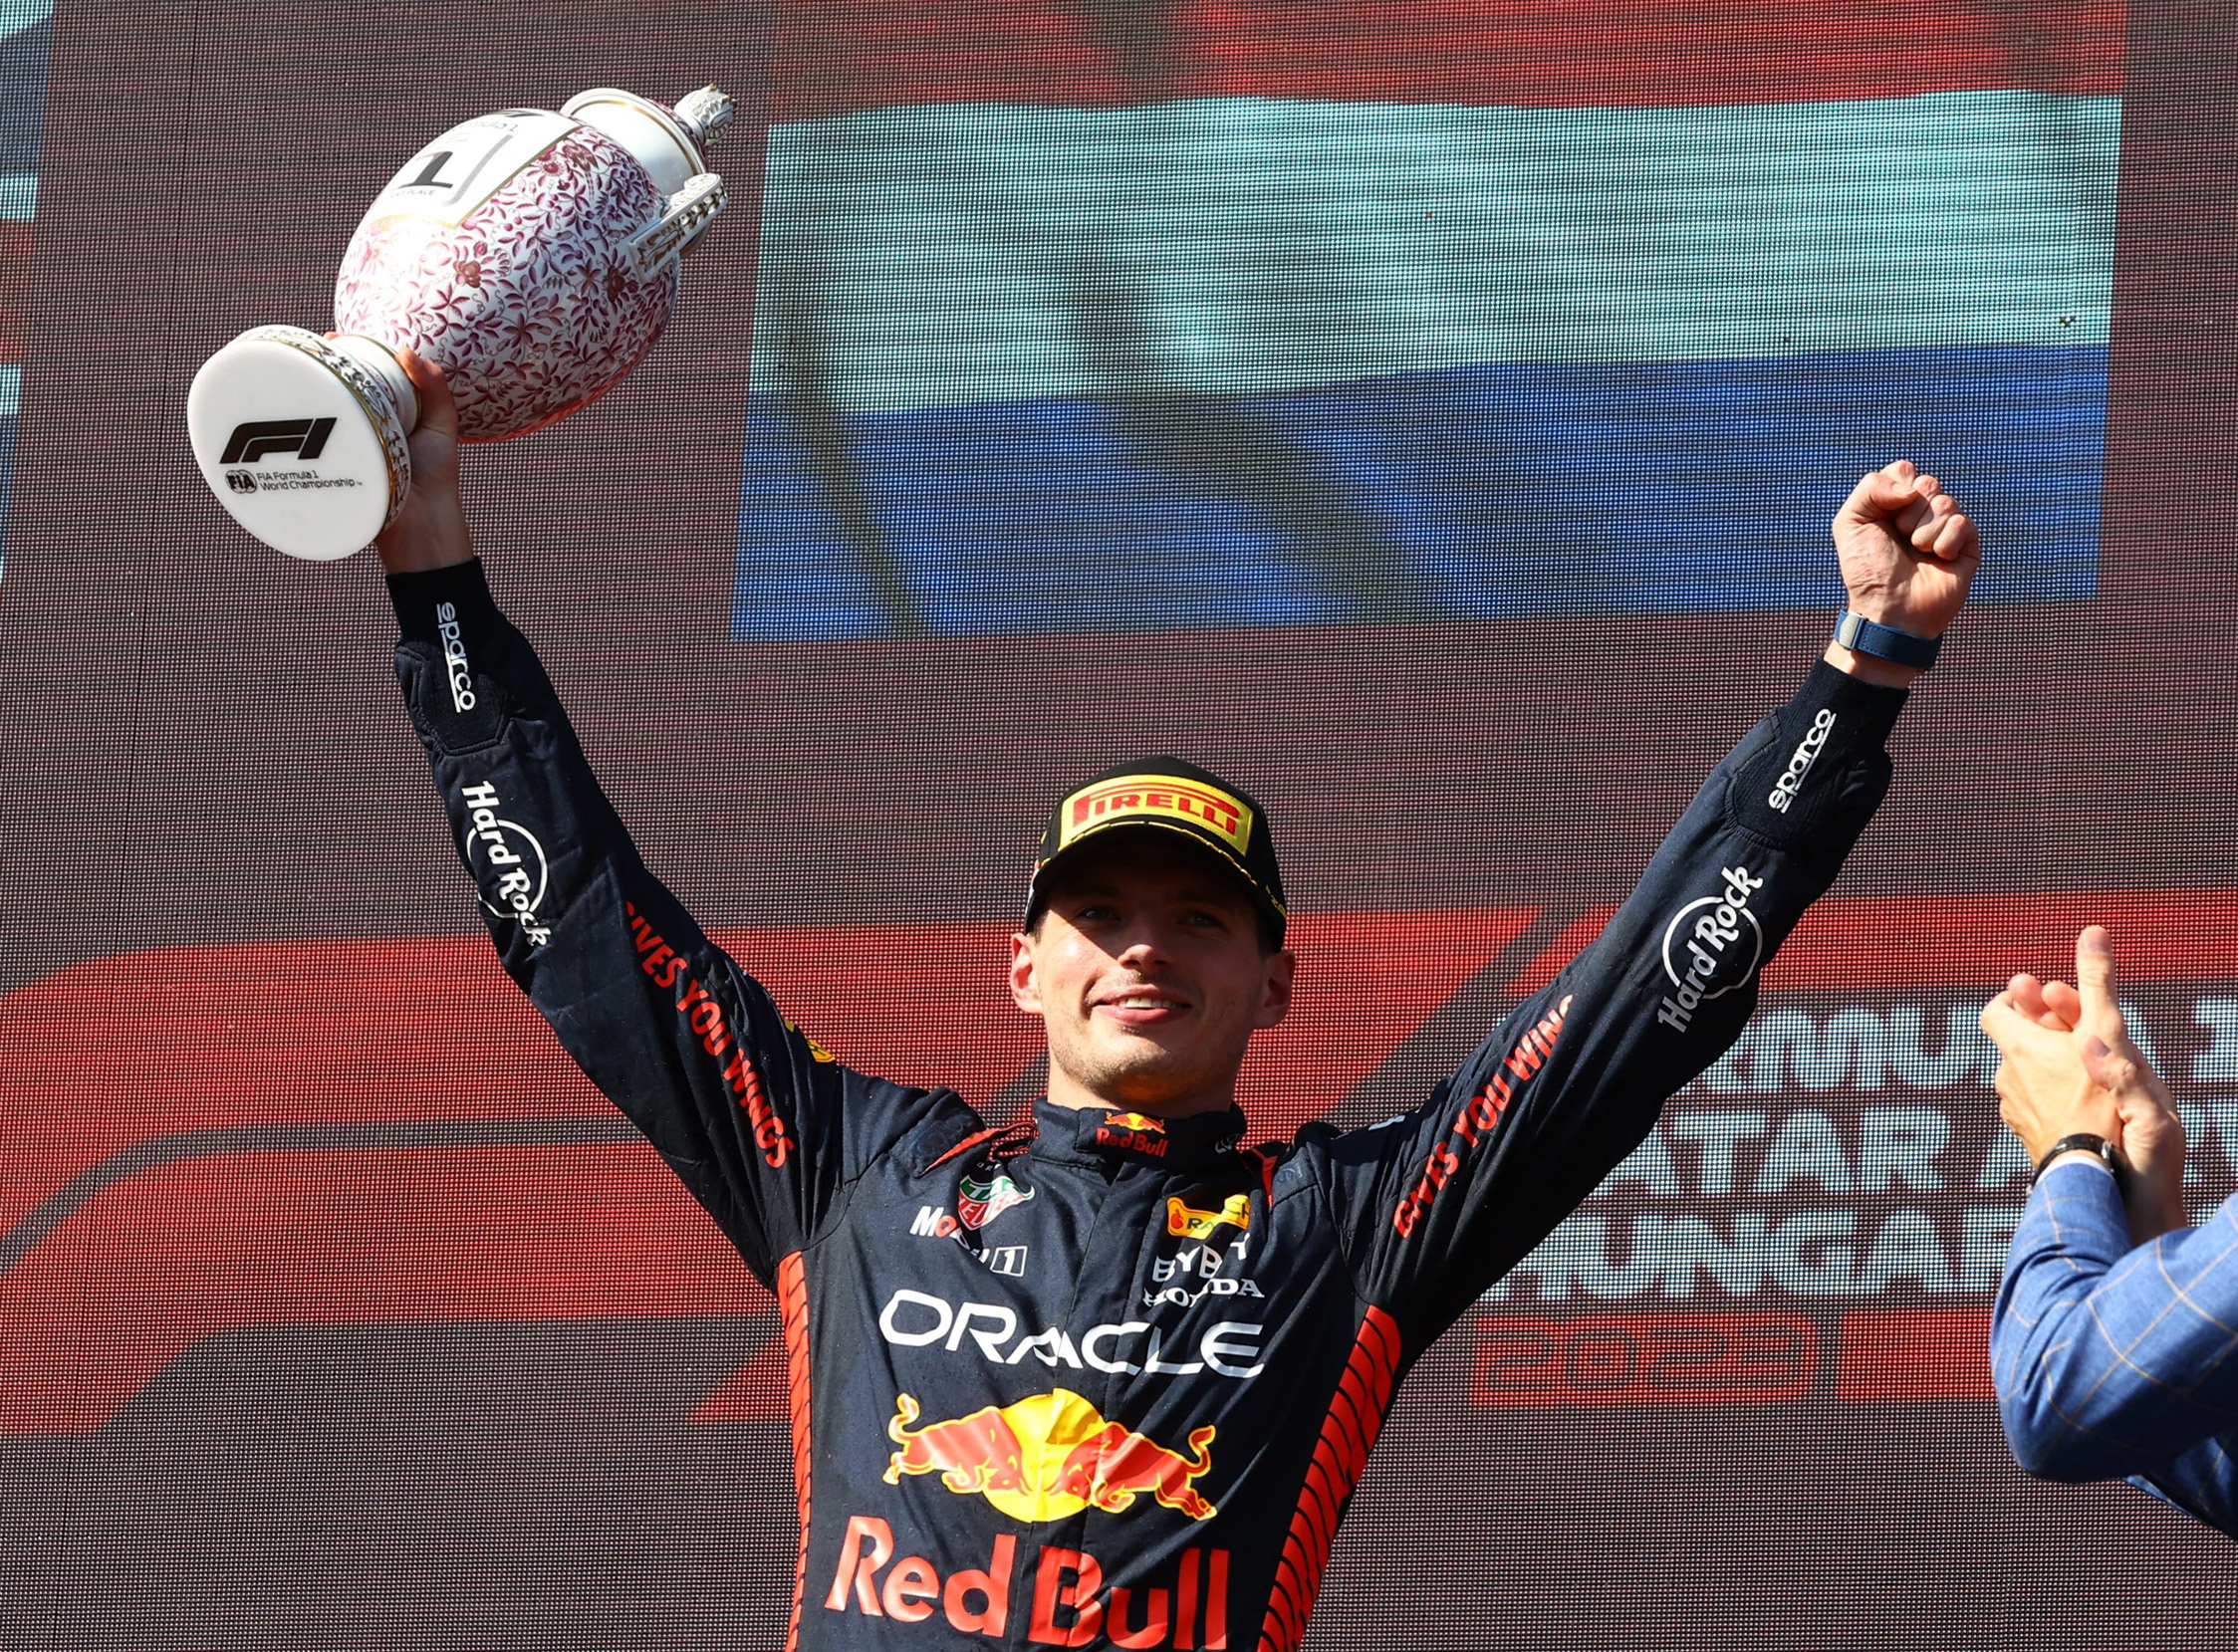 Daniel Ricciardo and Oscar Piastri react to opening lap 'chaos' in